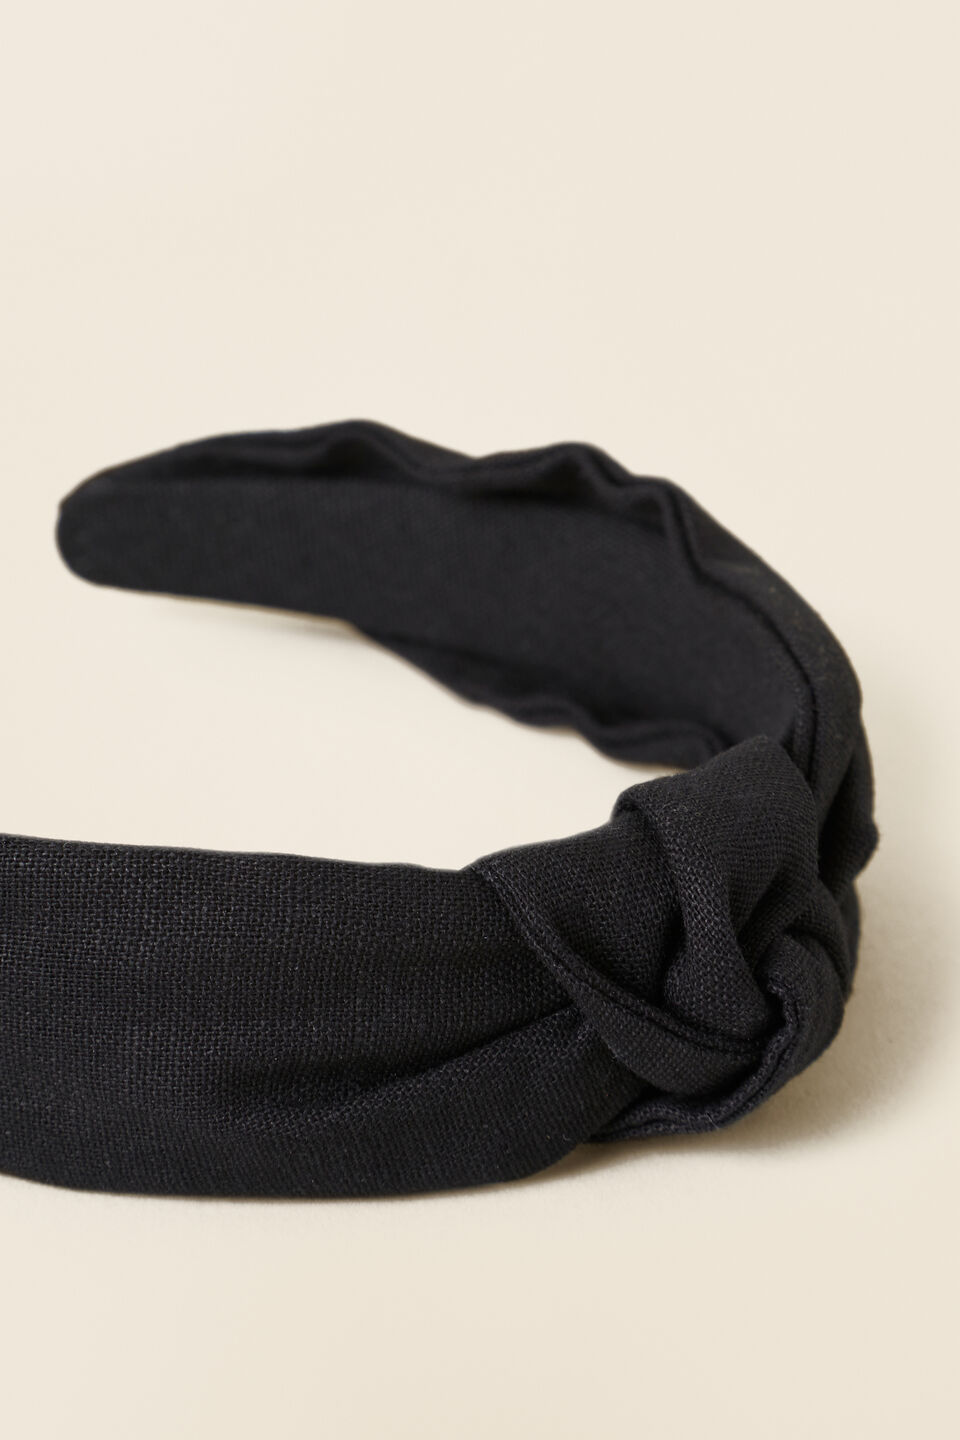 Linen Knot Headband  Black